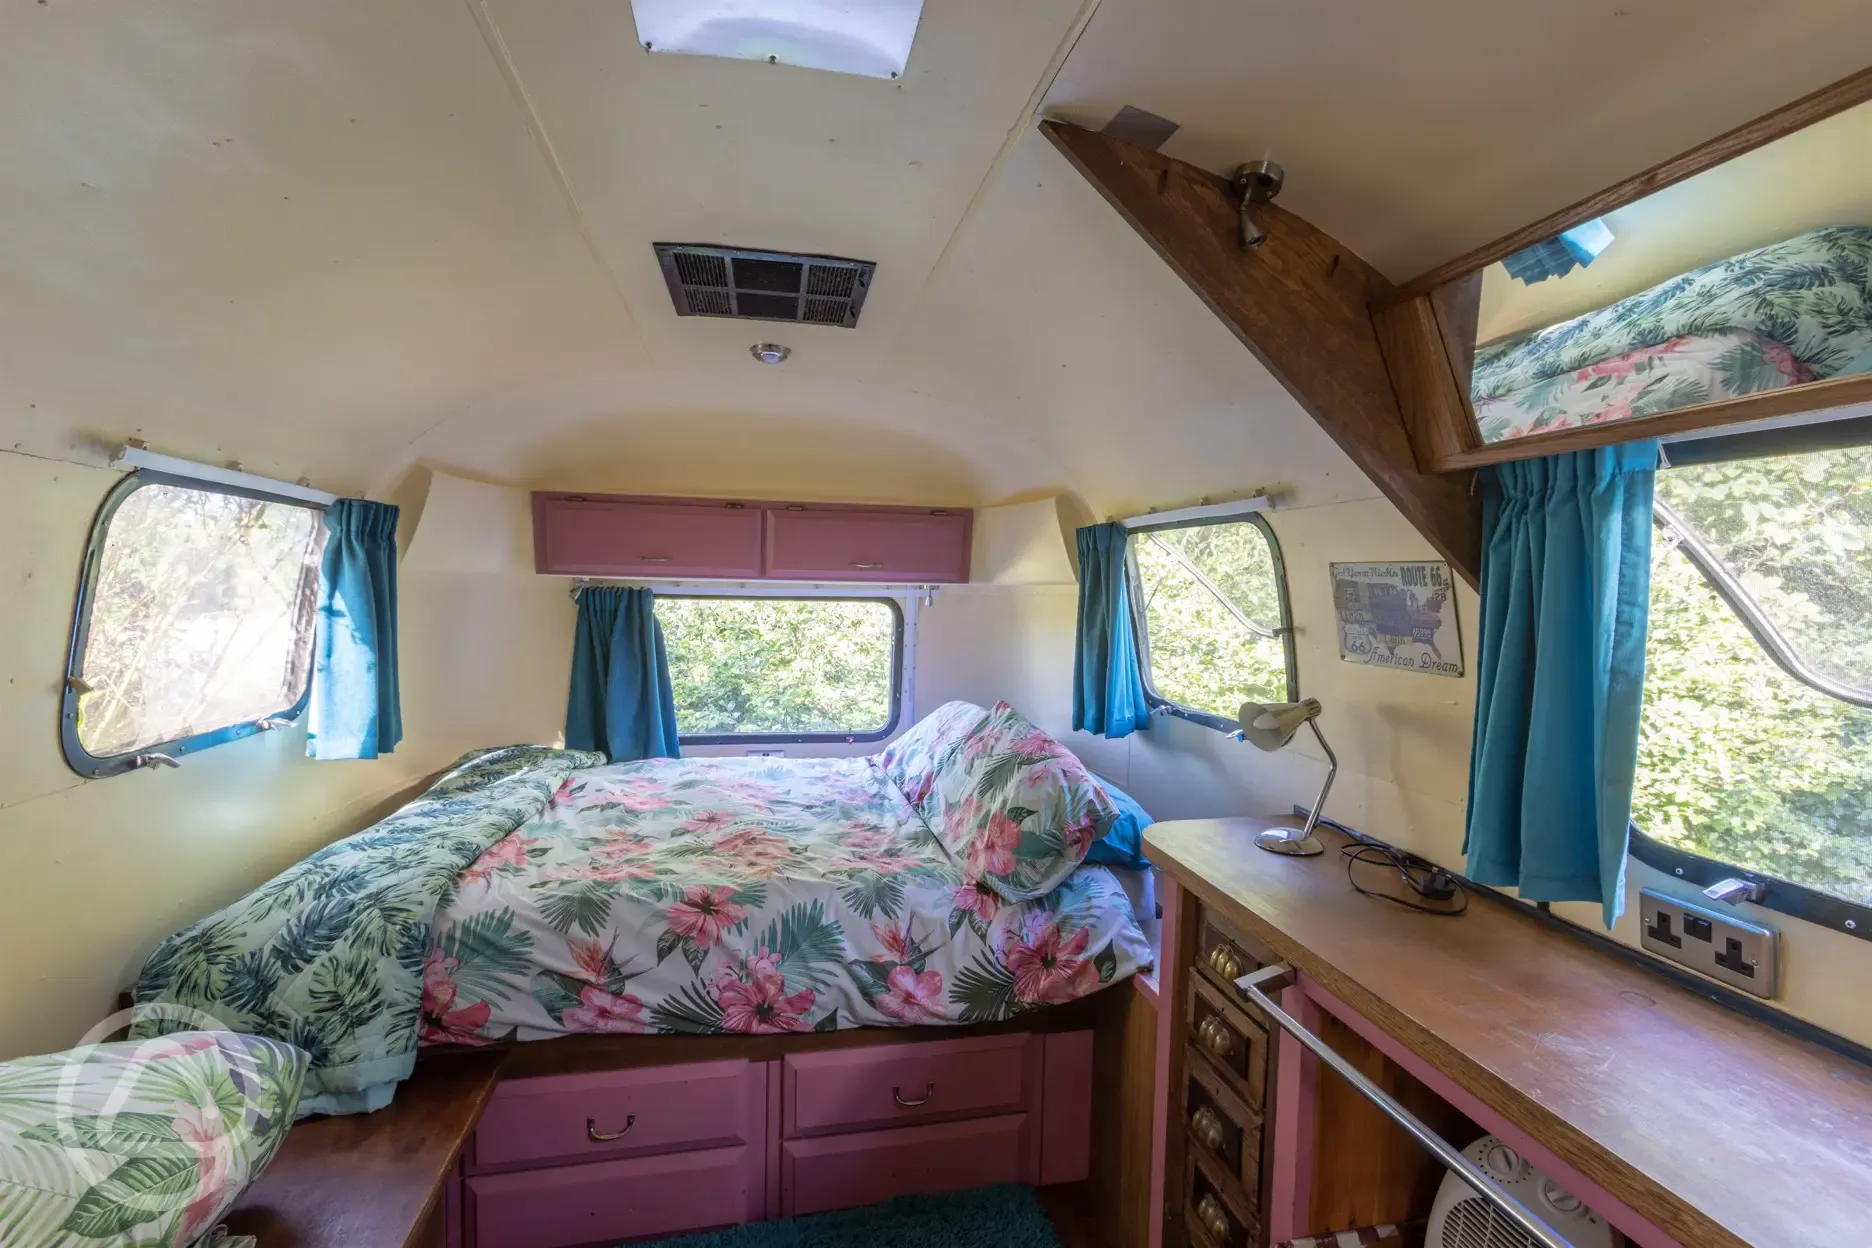 Airstream bedroom